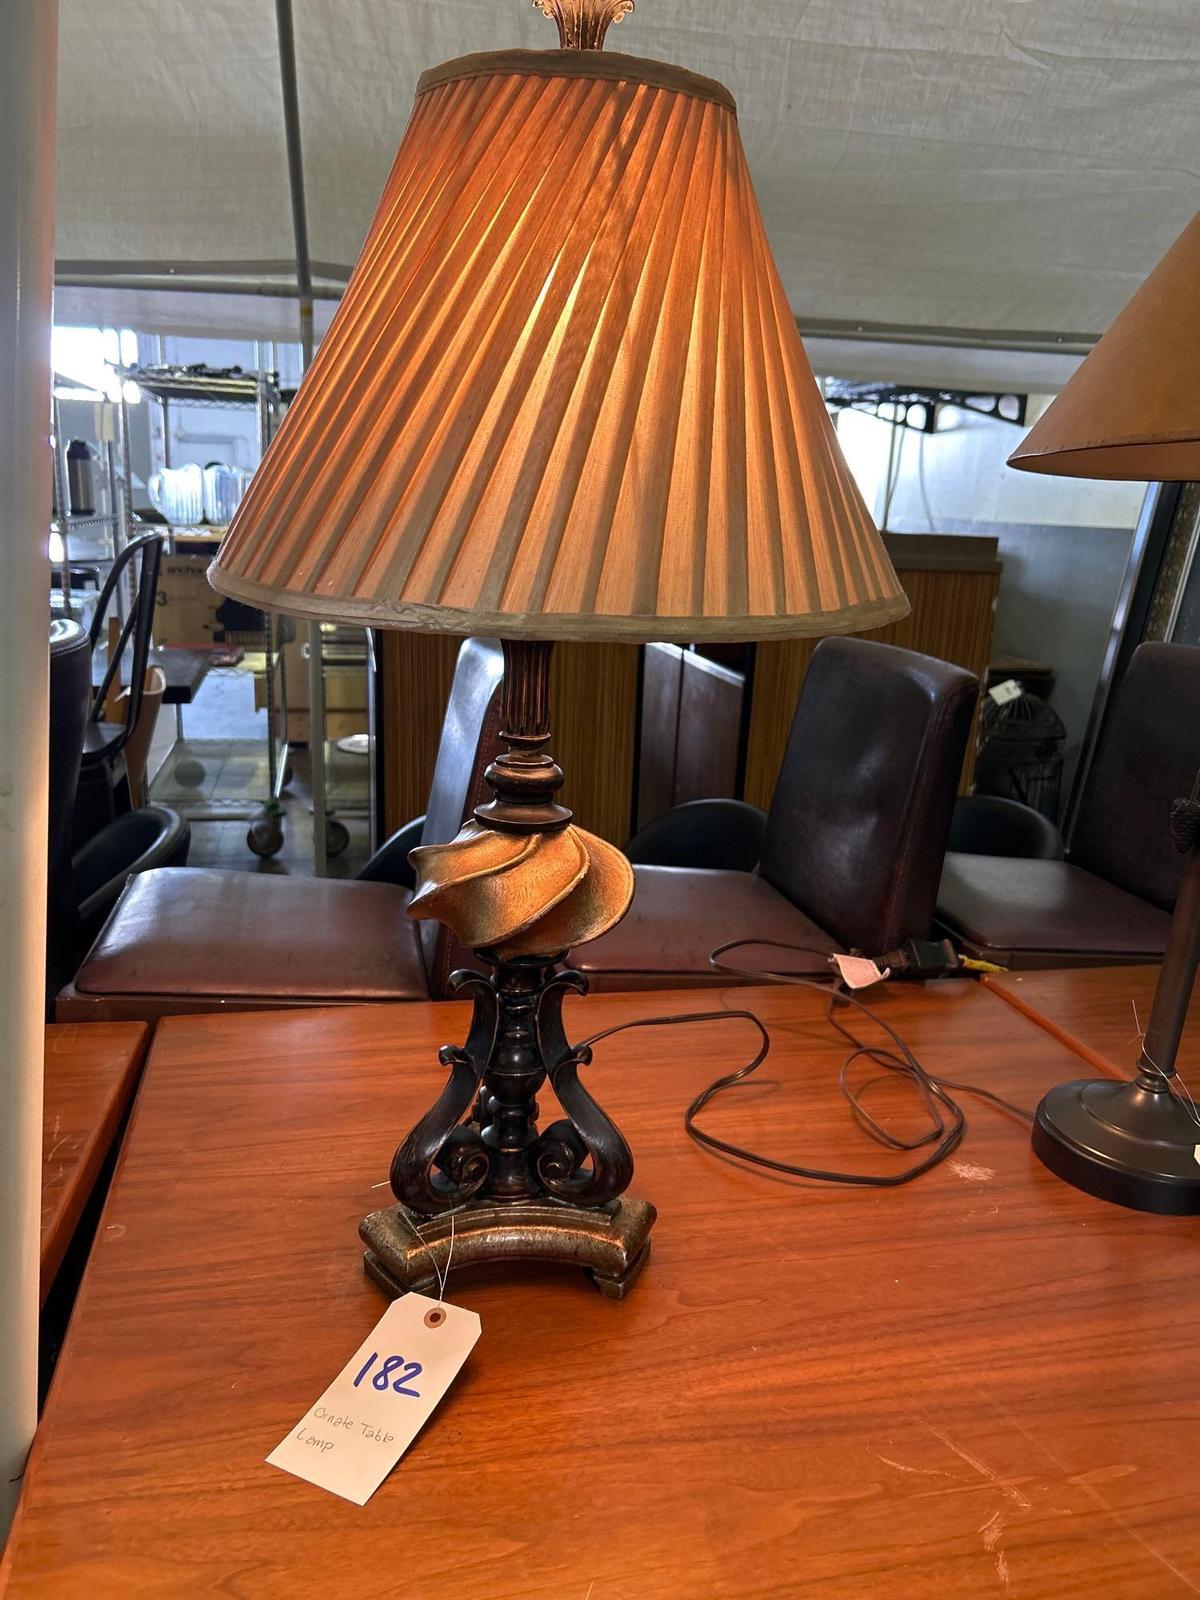 Table Lamp - Ornate Design